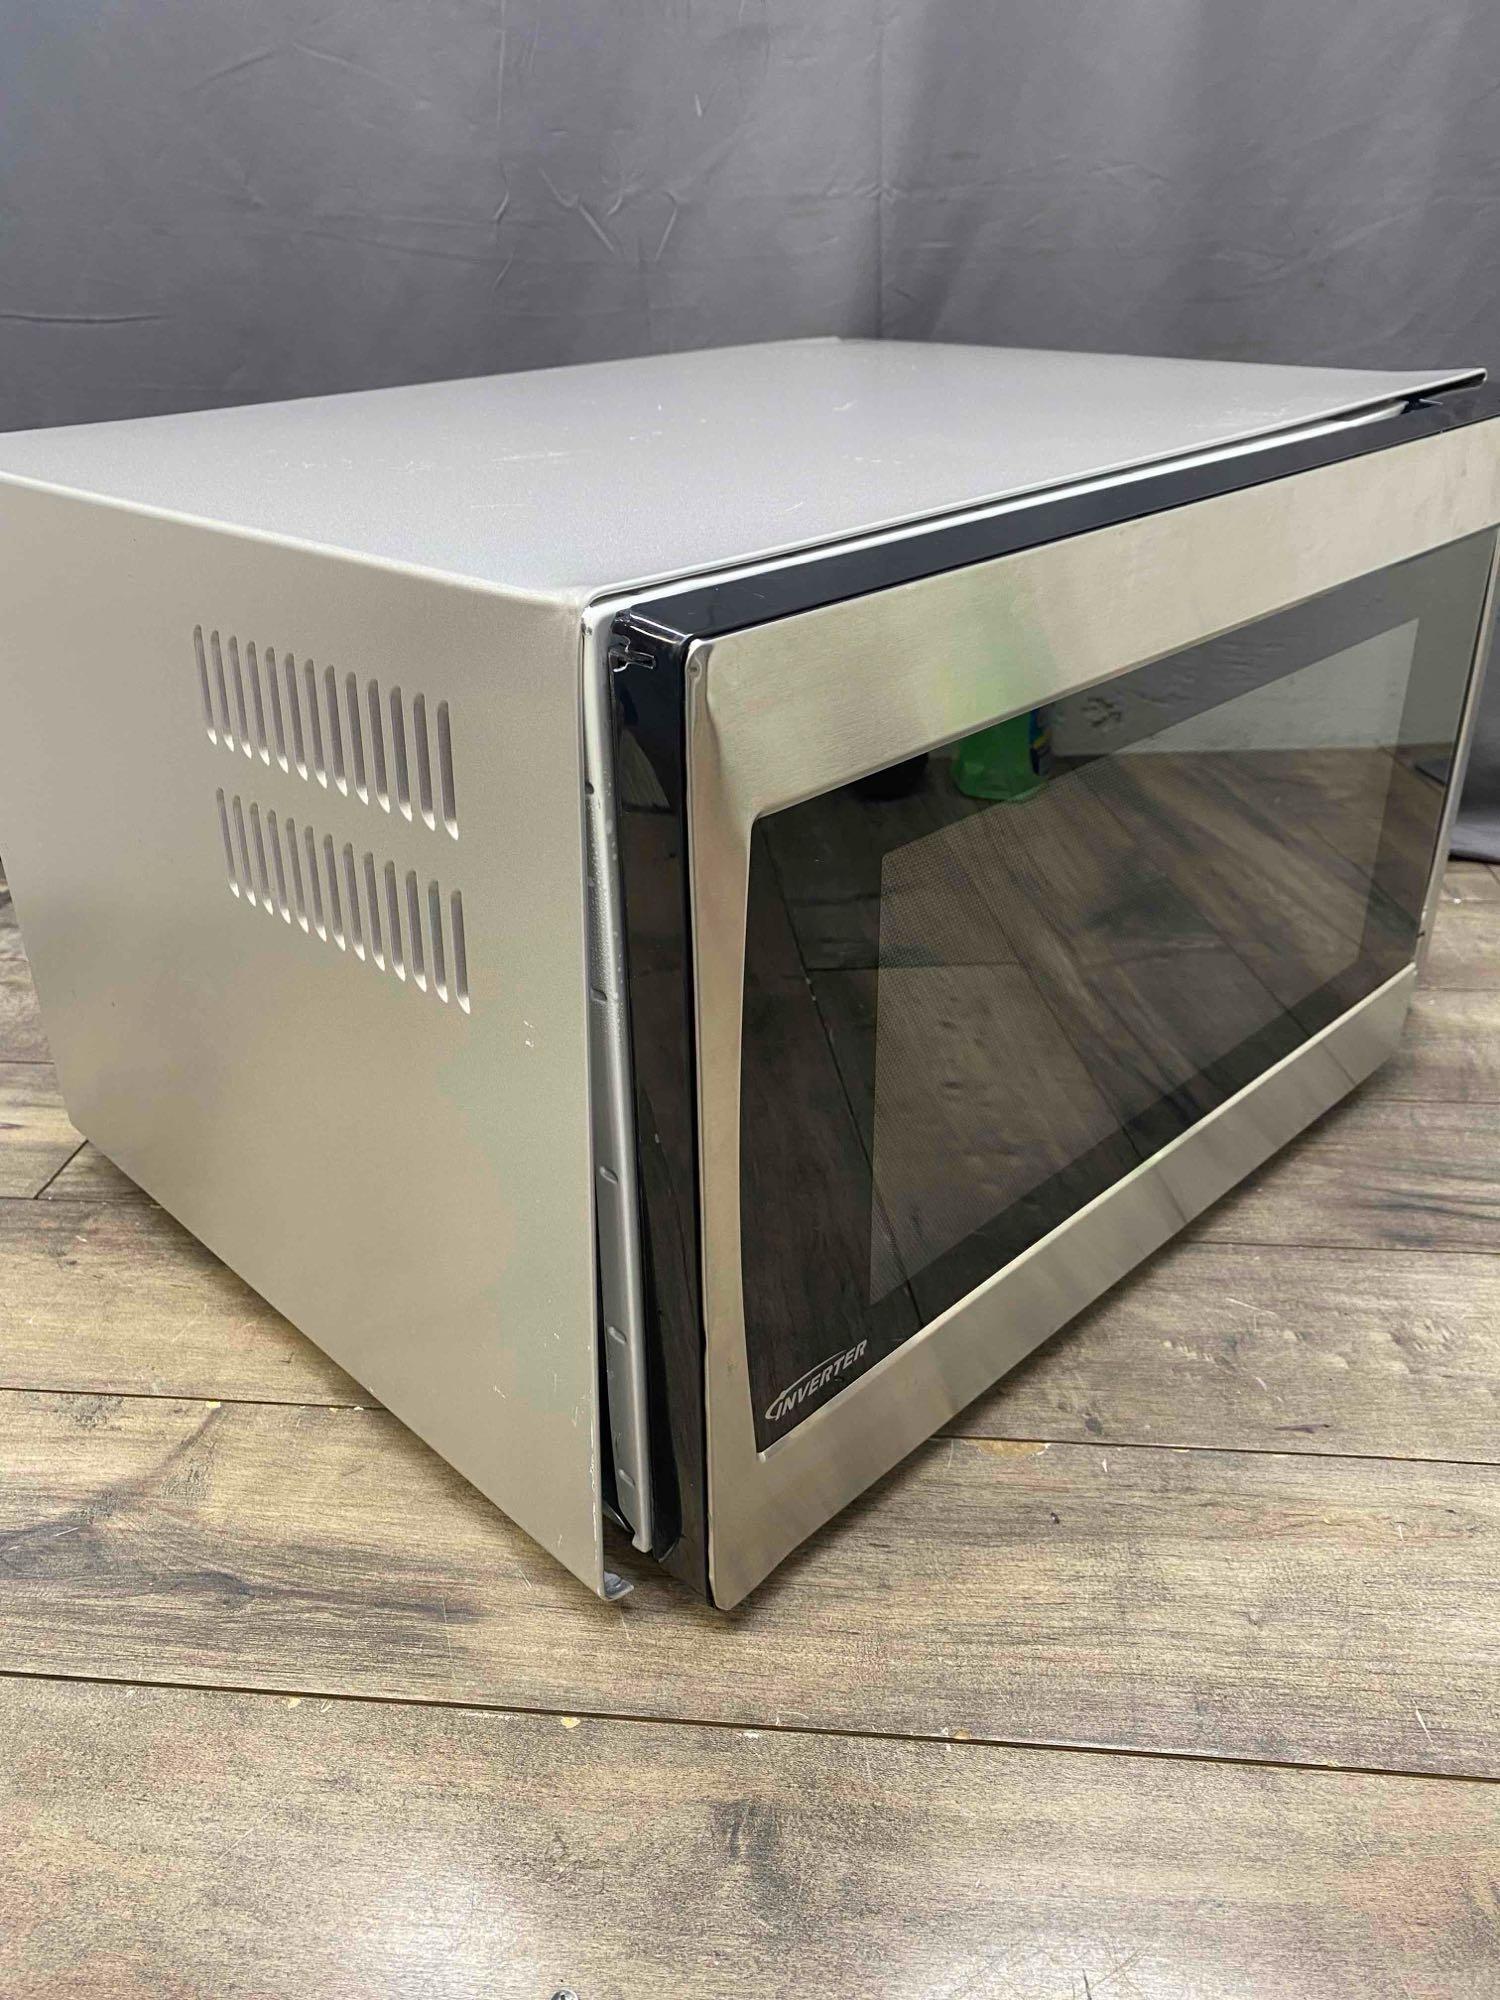 Panasonic Microwave Oven Stainless Steel